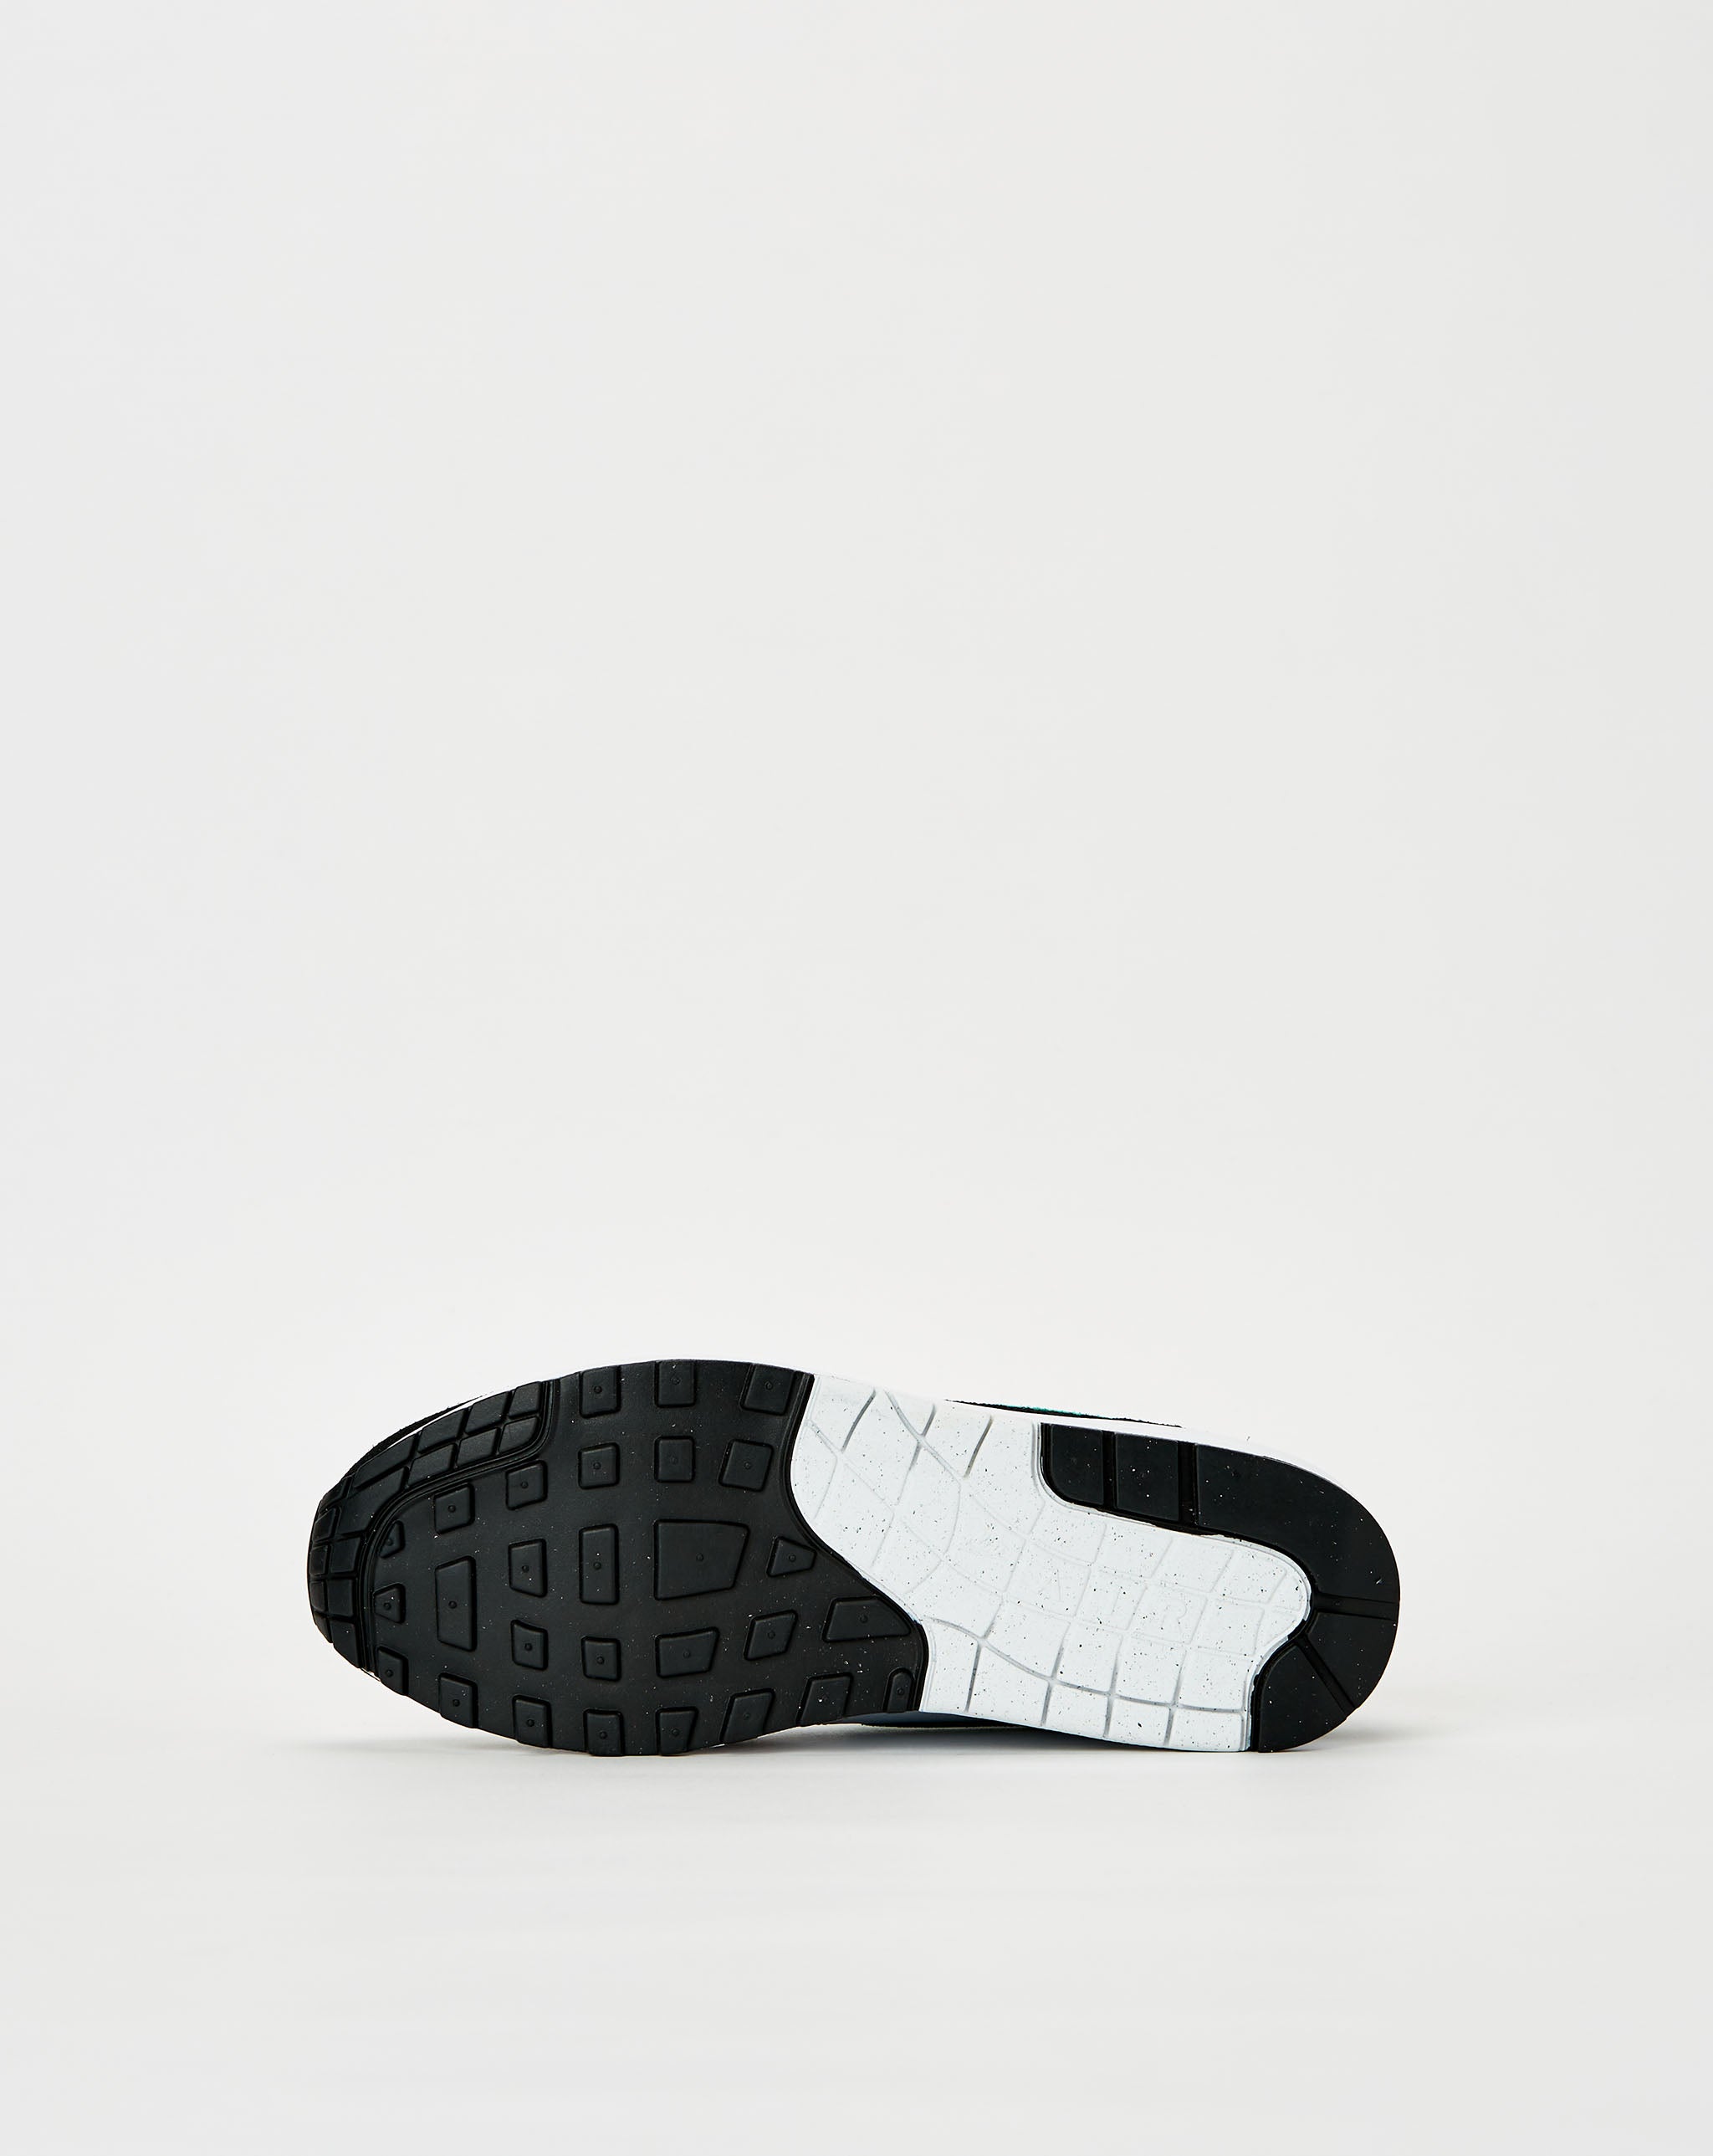 Nike nike air force unlimited spurs b shoes sale girls  - Cheap Cerbe Jordan outlet